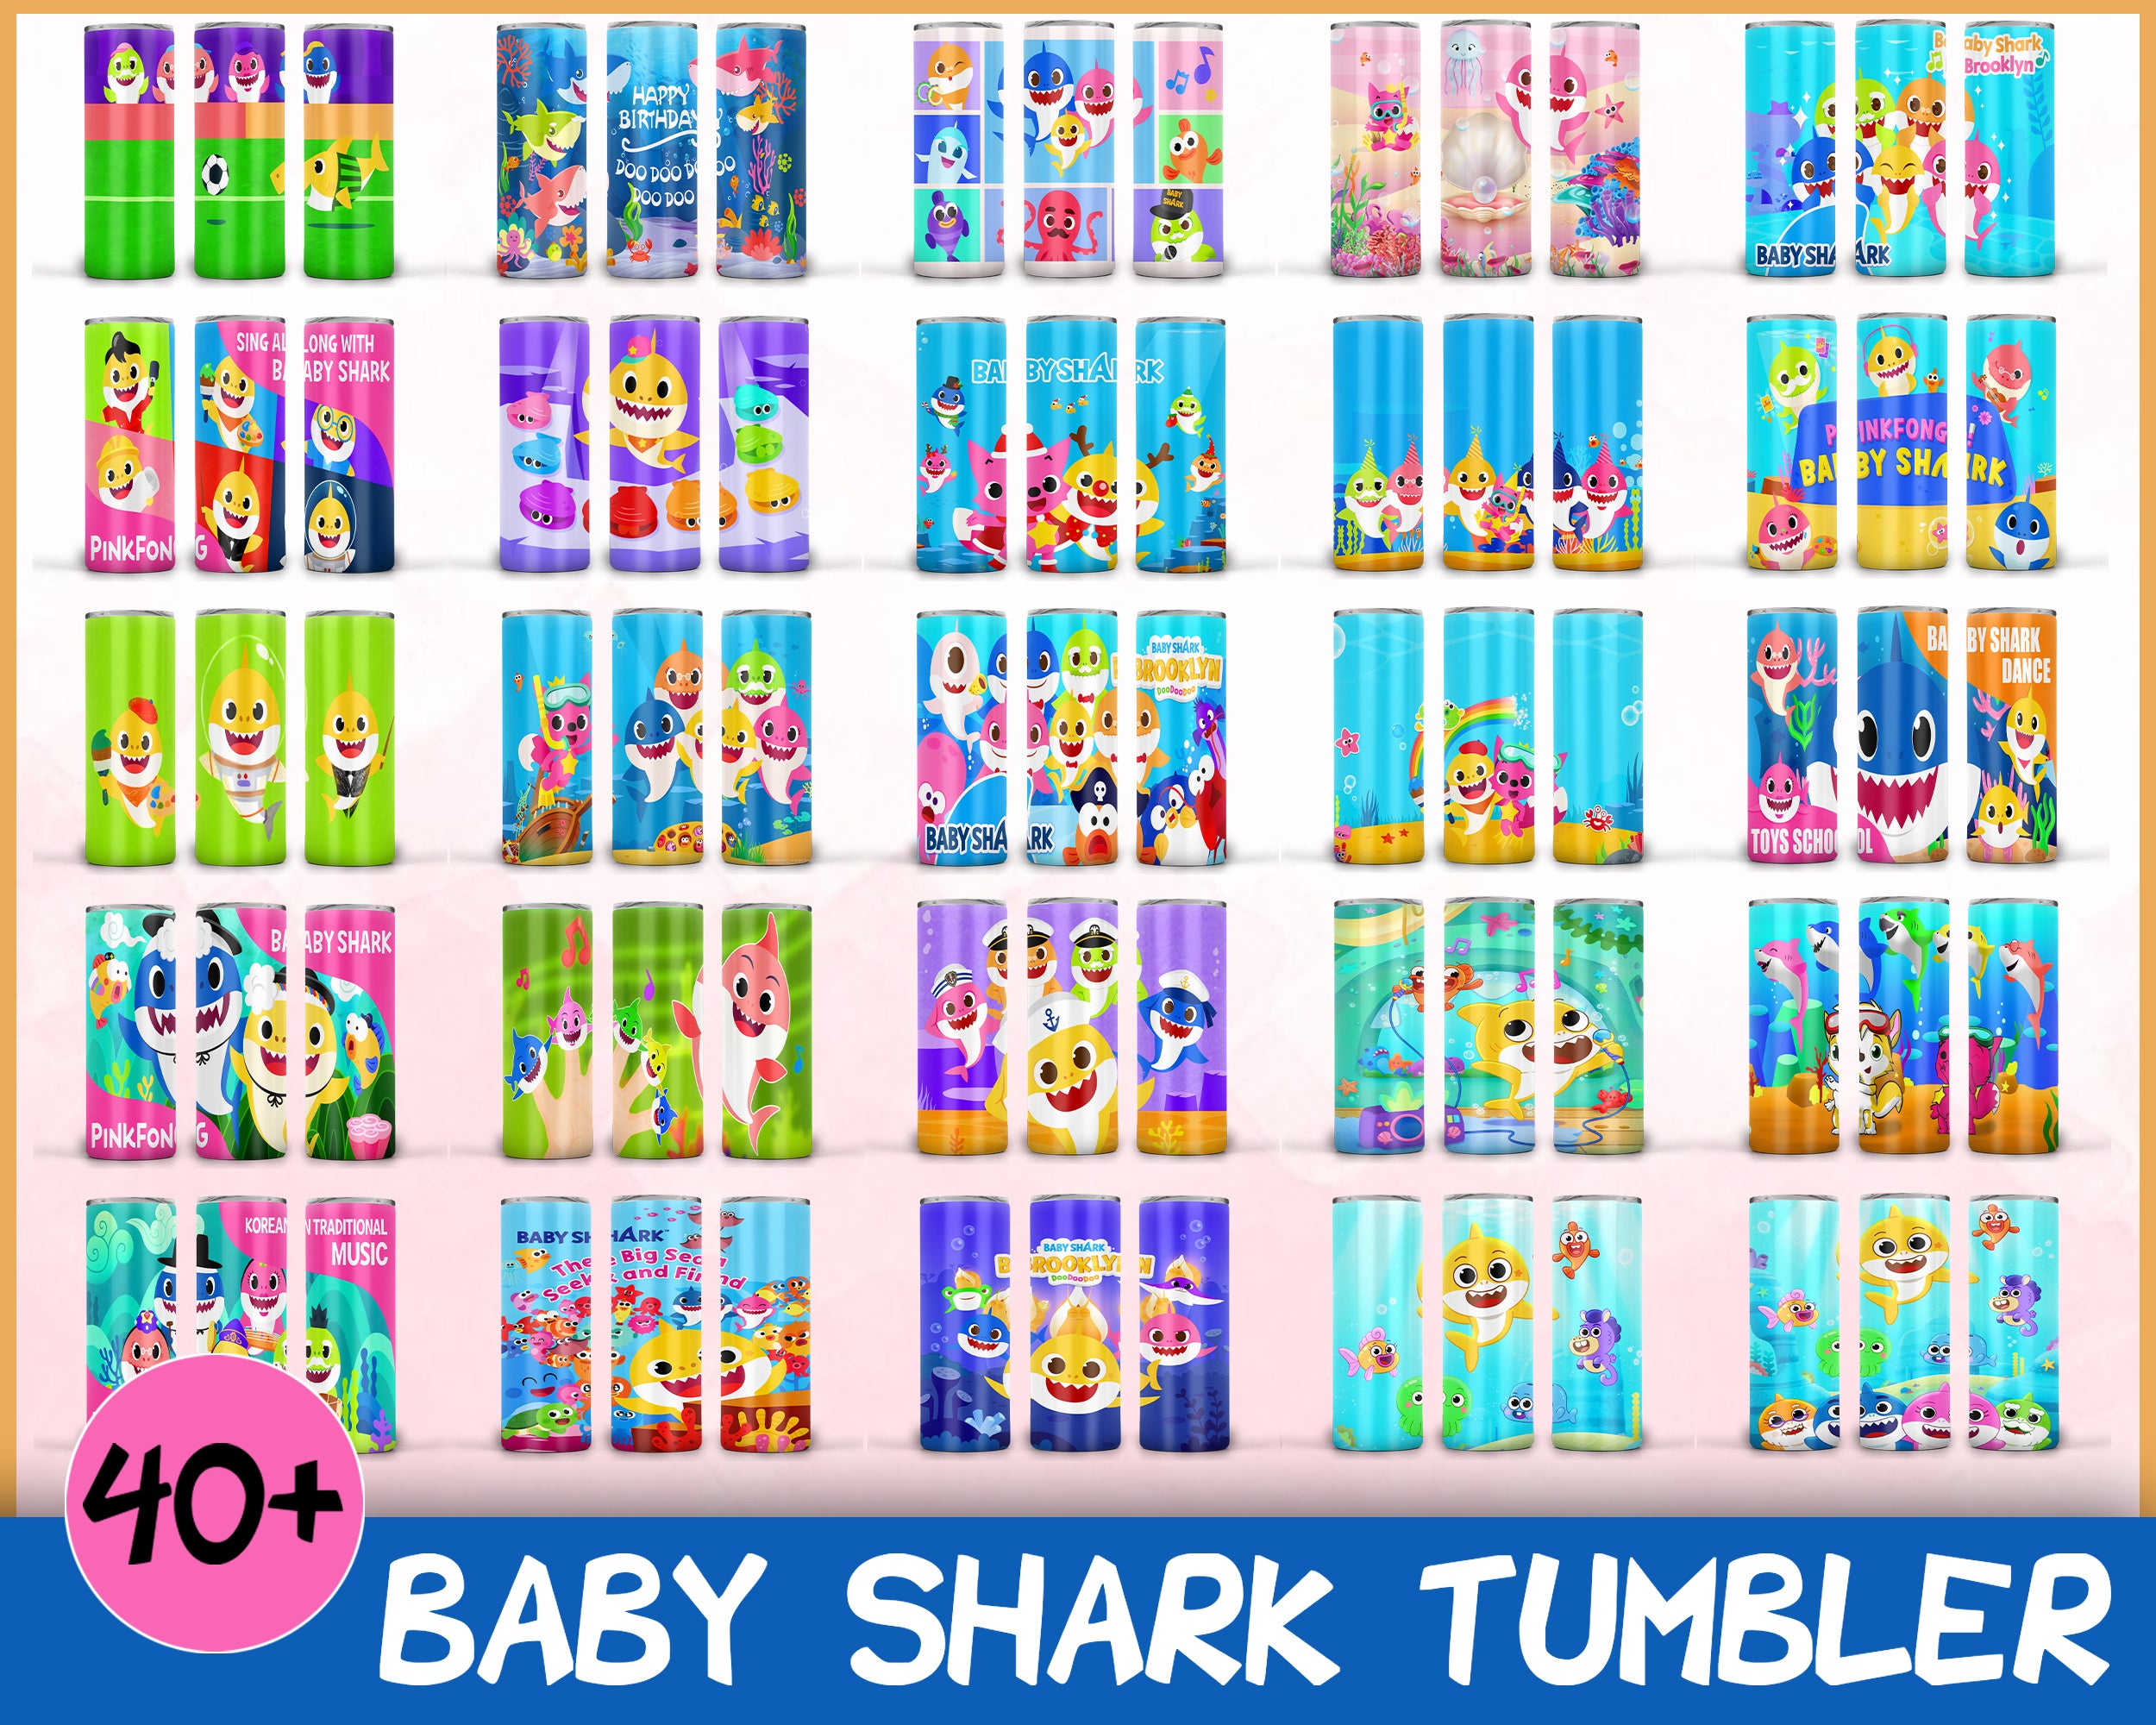 Baby shark Tumbler Bundle - Baby shark png - Digital download